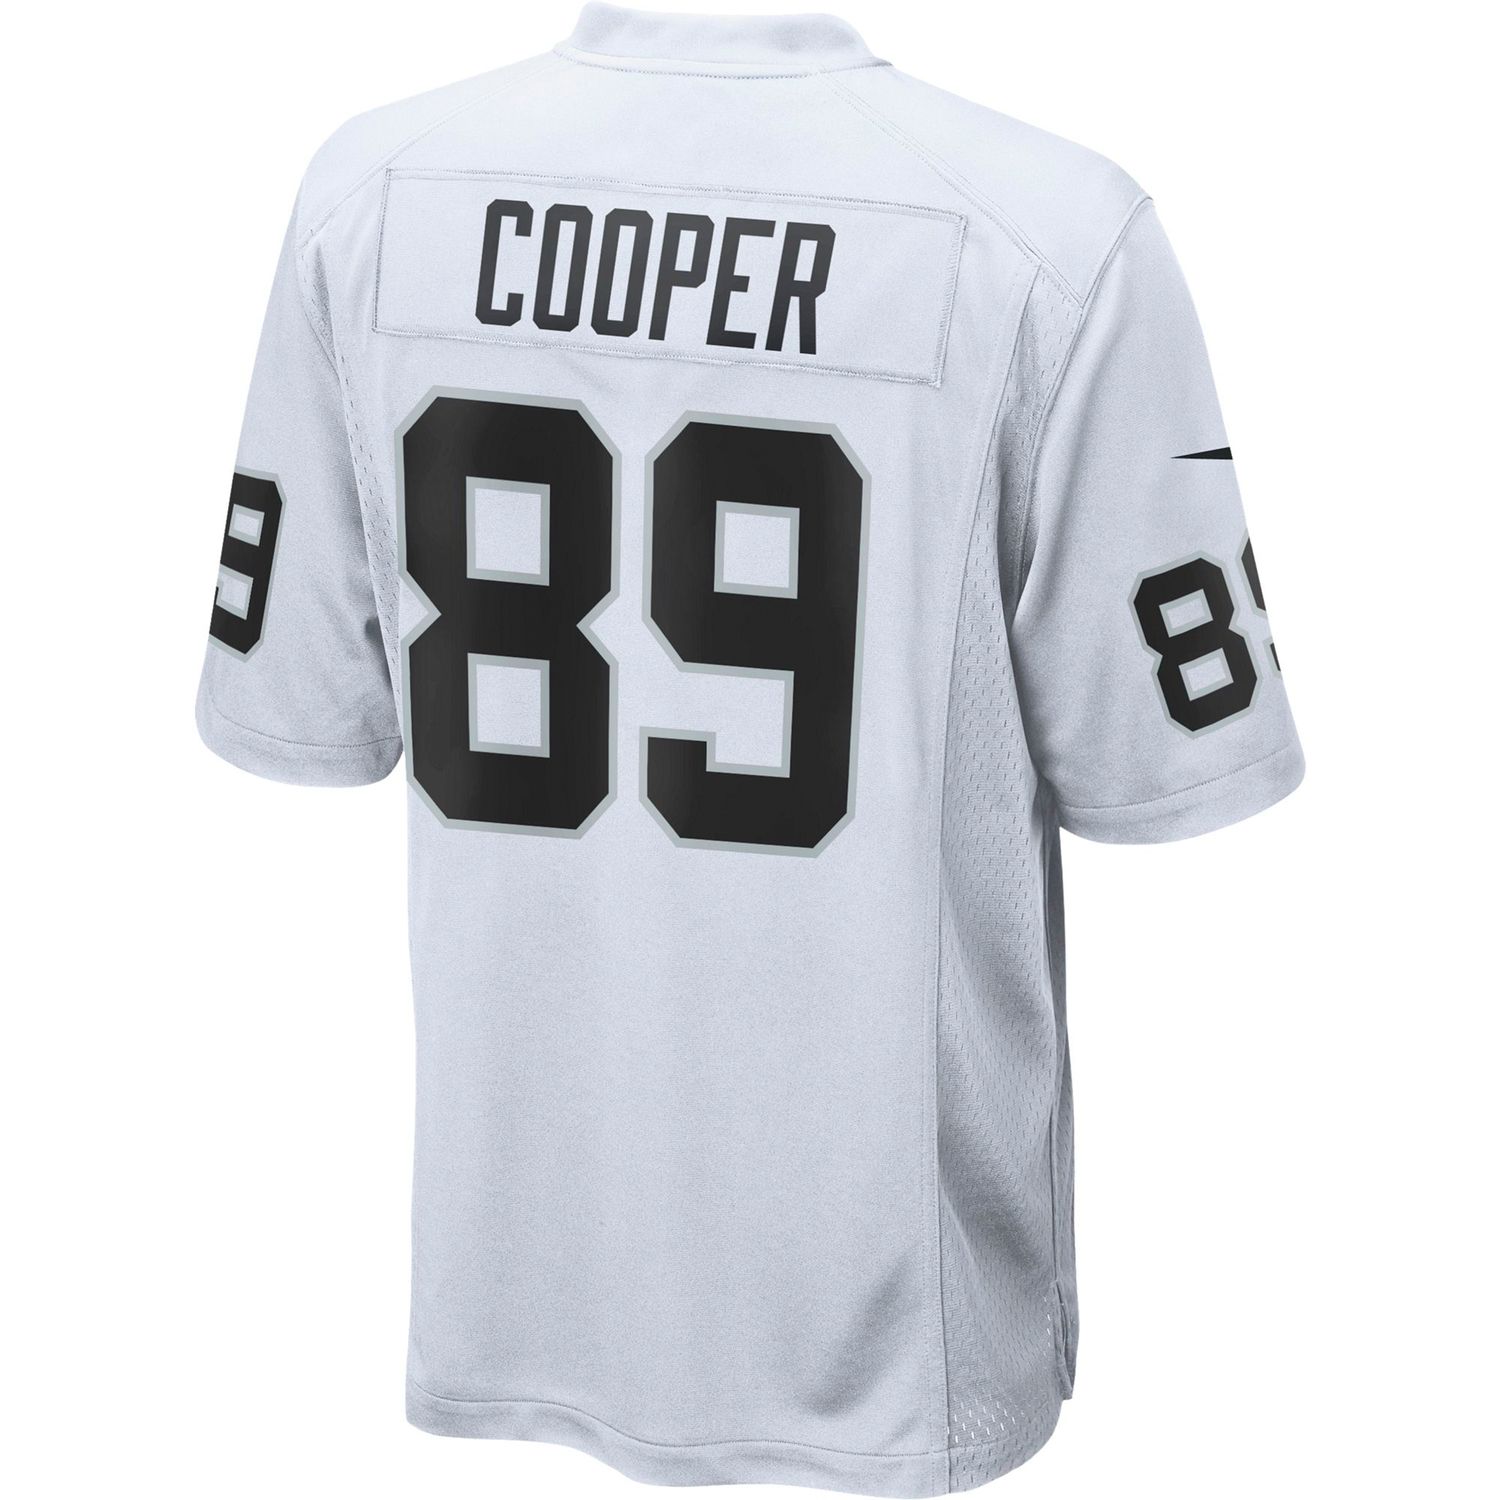 cooper raiders jersey